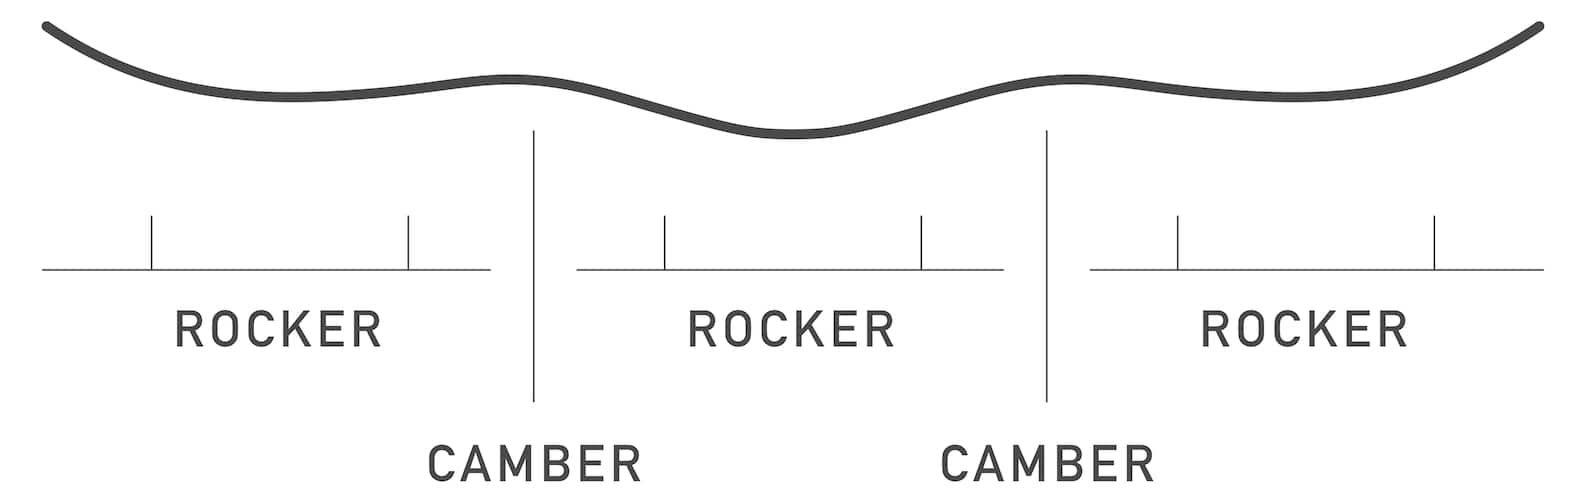 Rocker Snowboard Guide: Camber vs. Rocker vs. Flat | Burton Snowboards